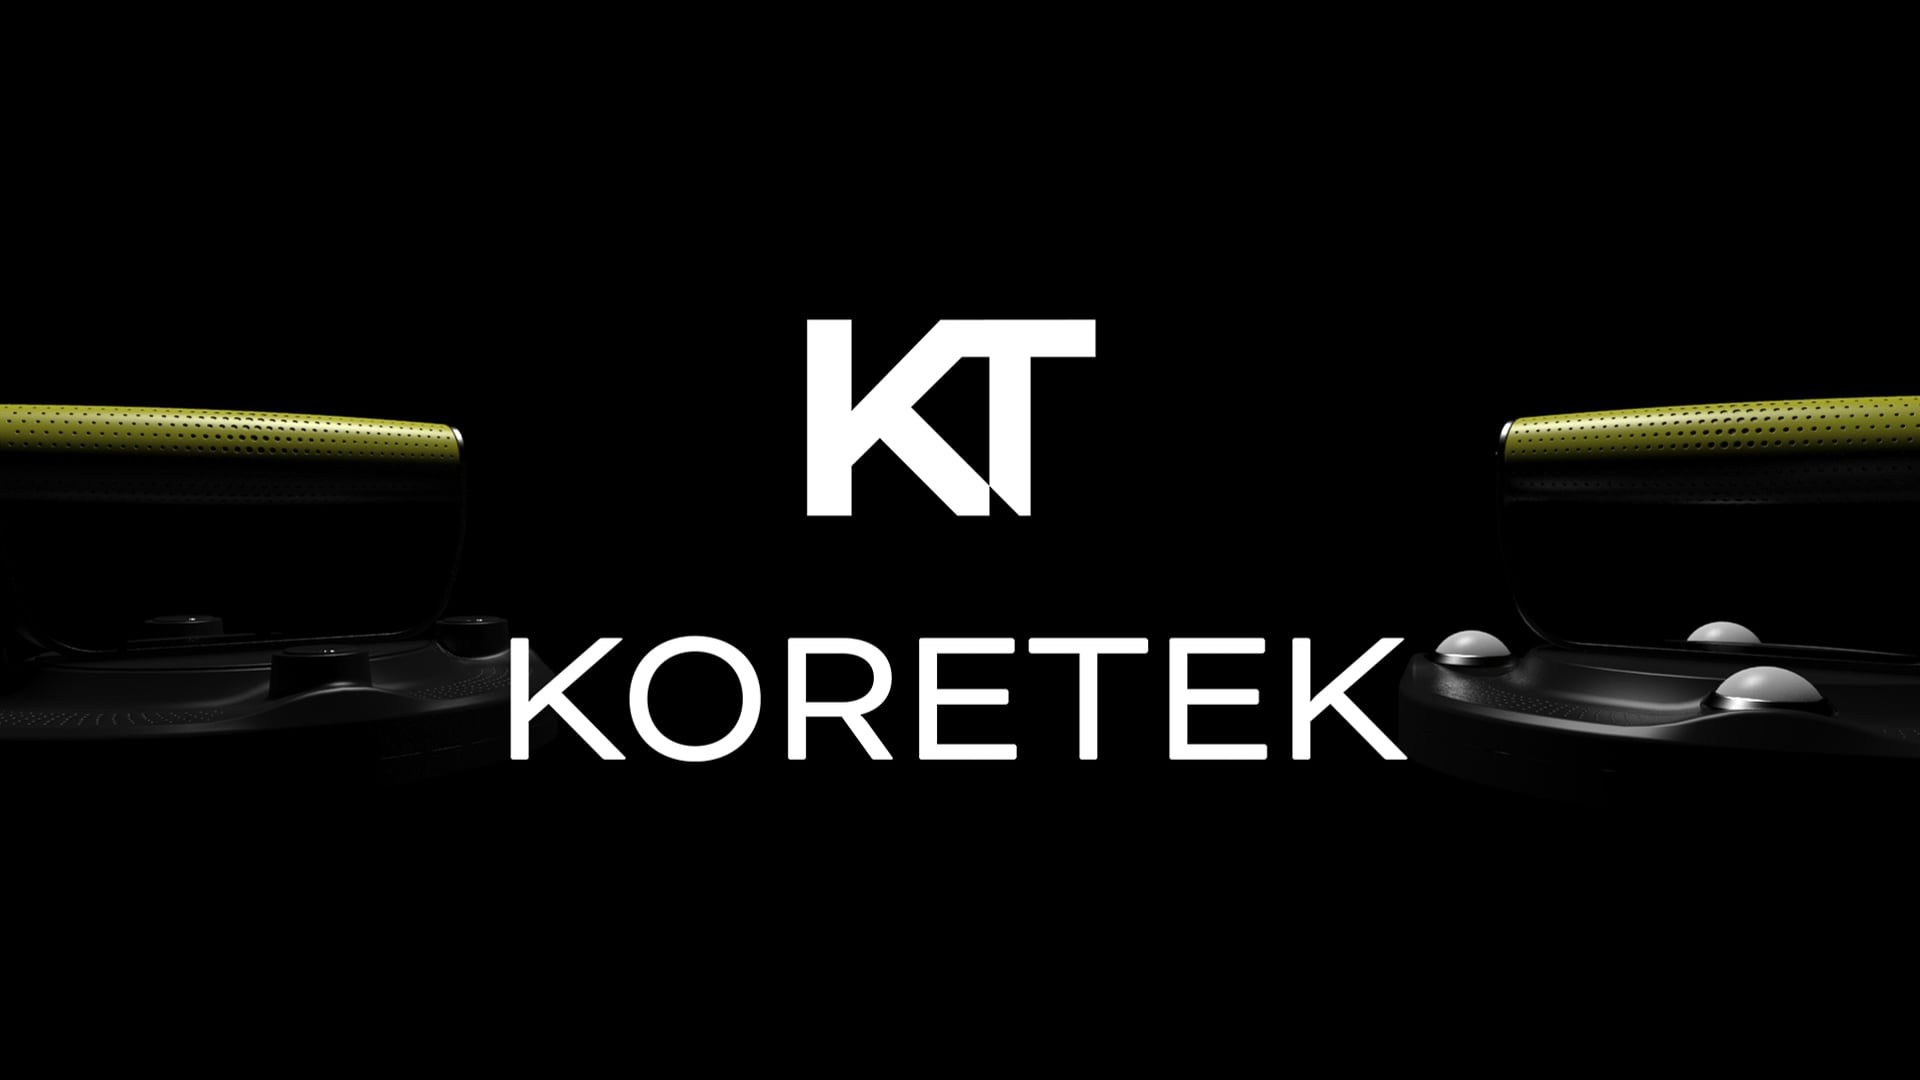 Koretek - The all in one fitness device